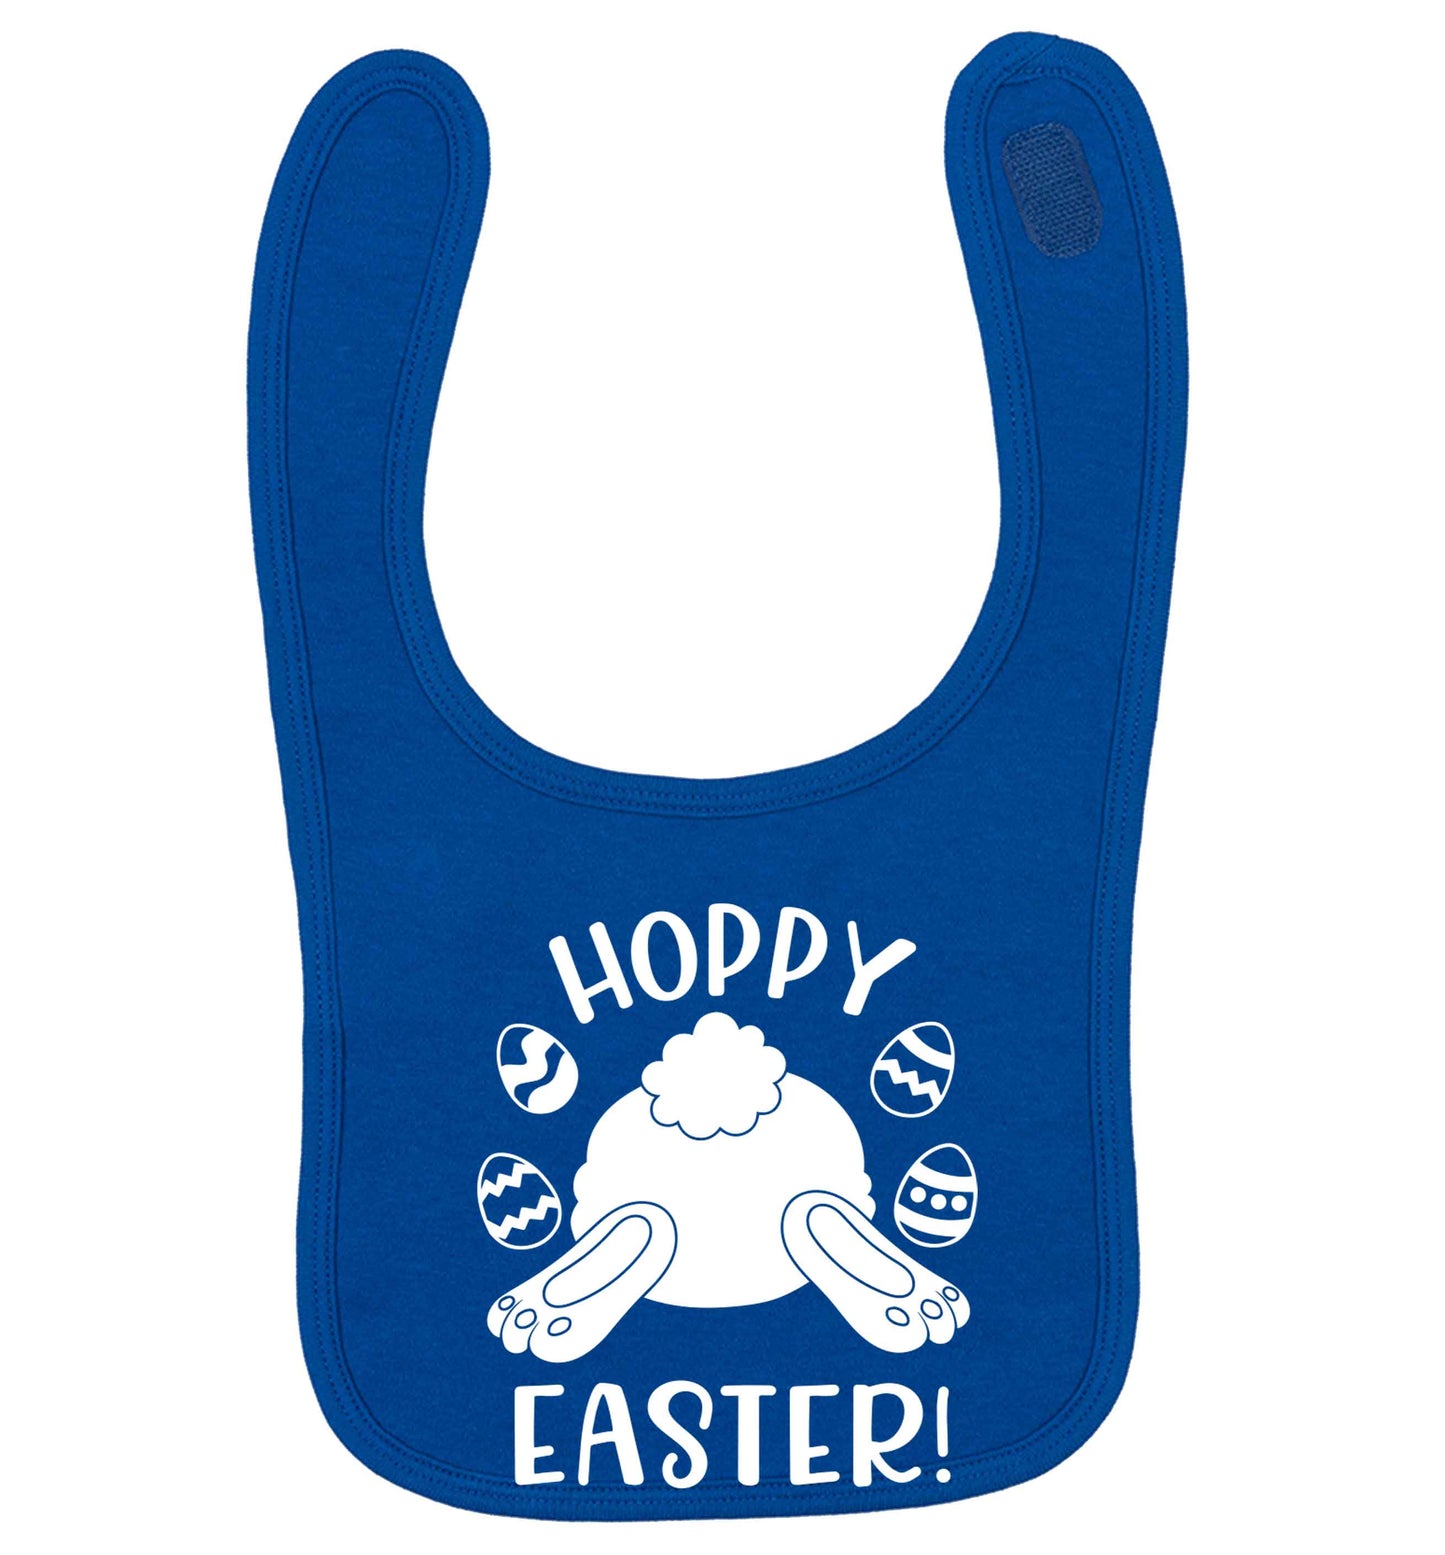 Hoppy Easter royal blue baby bib